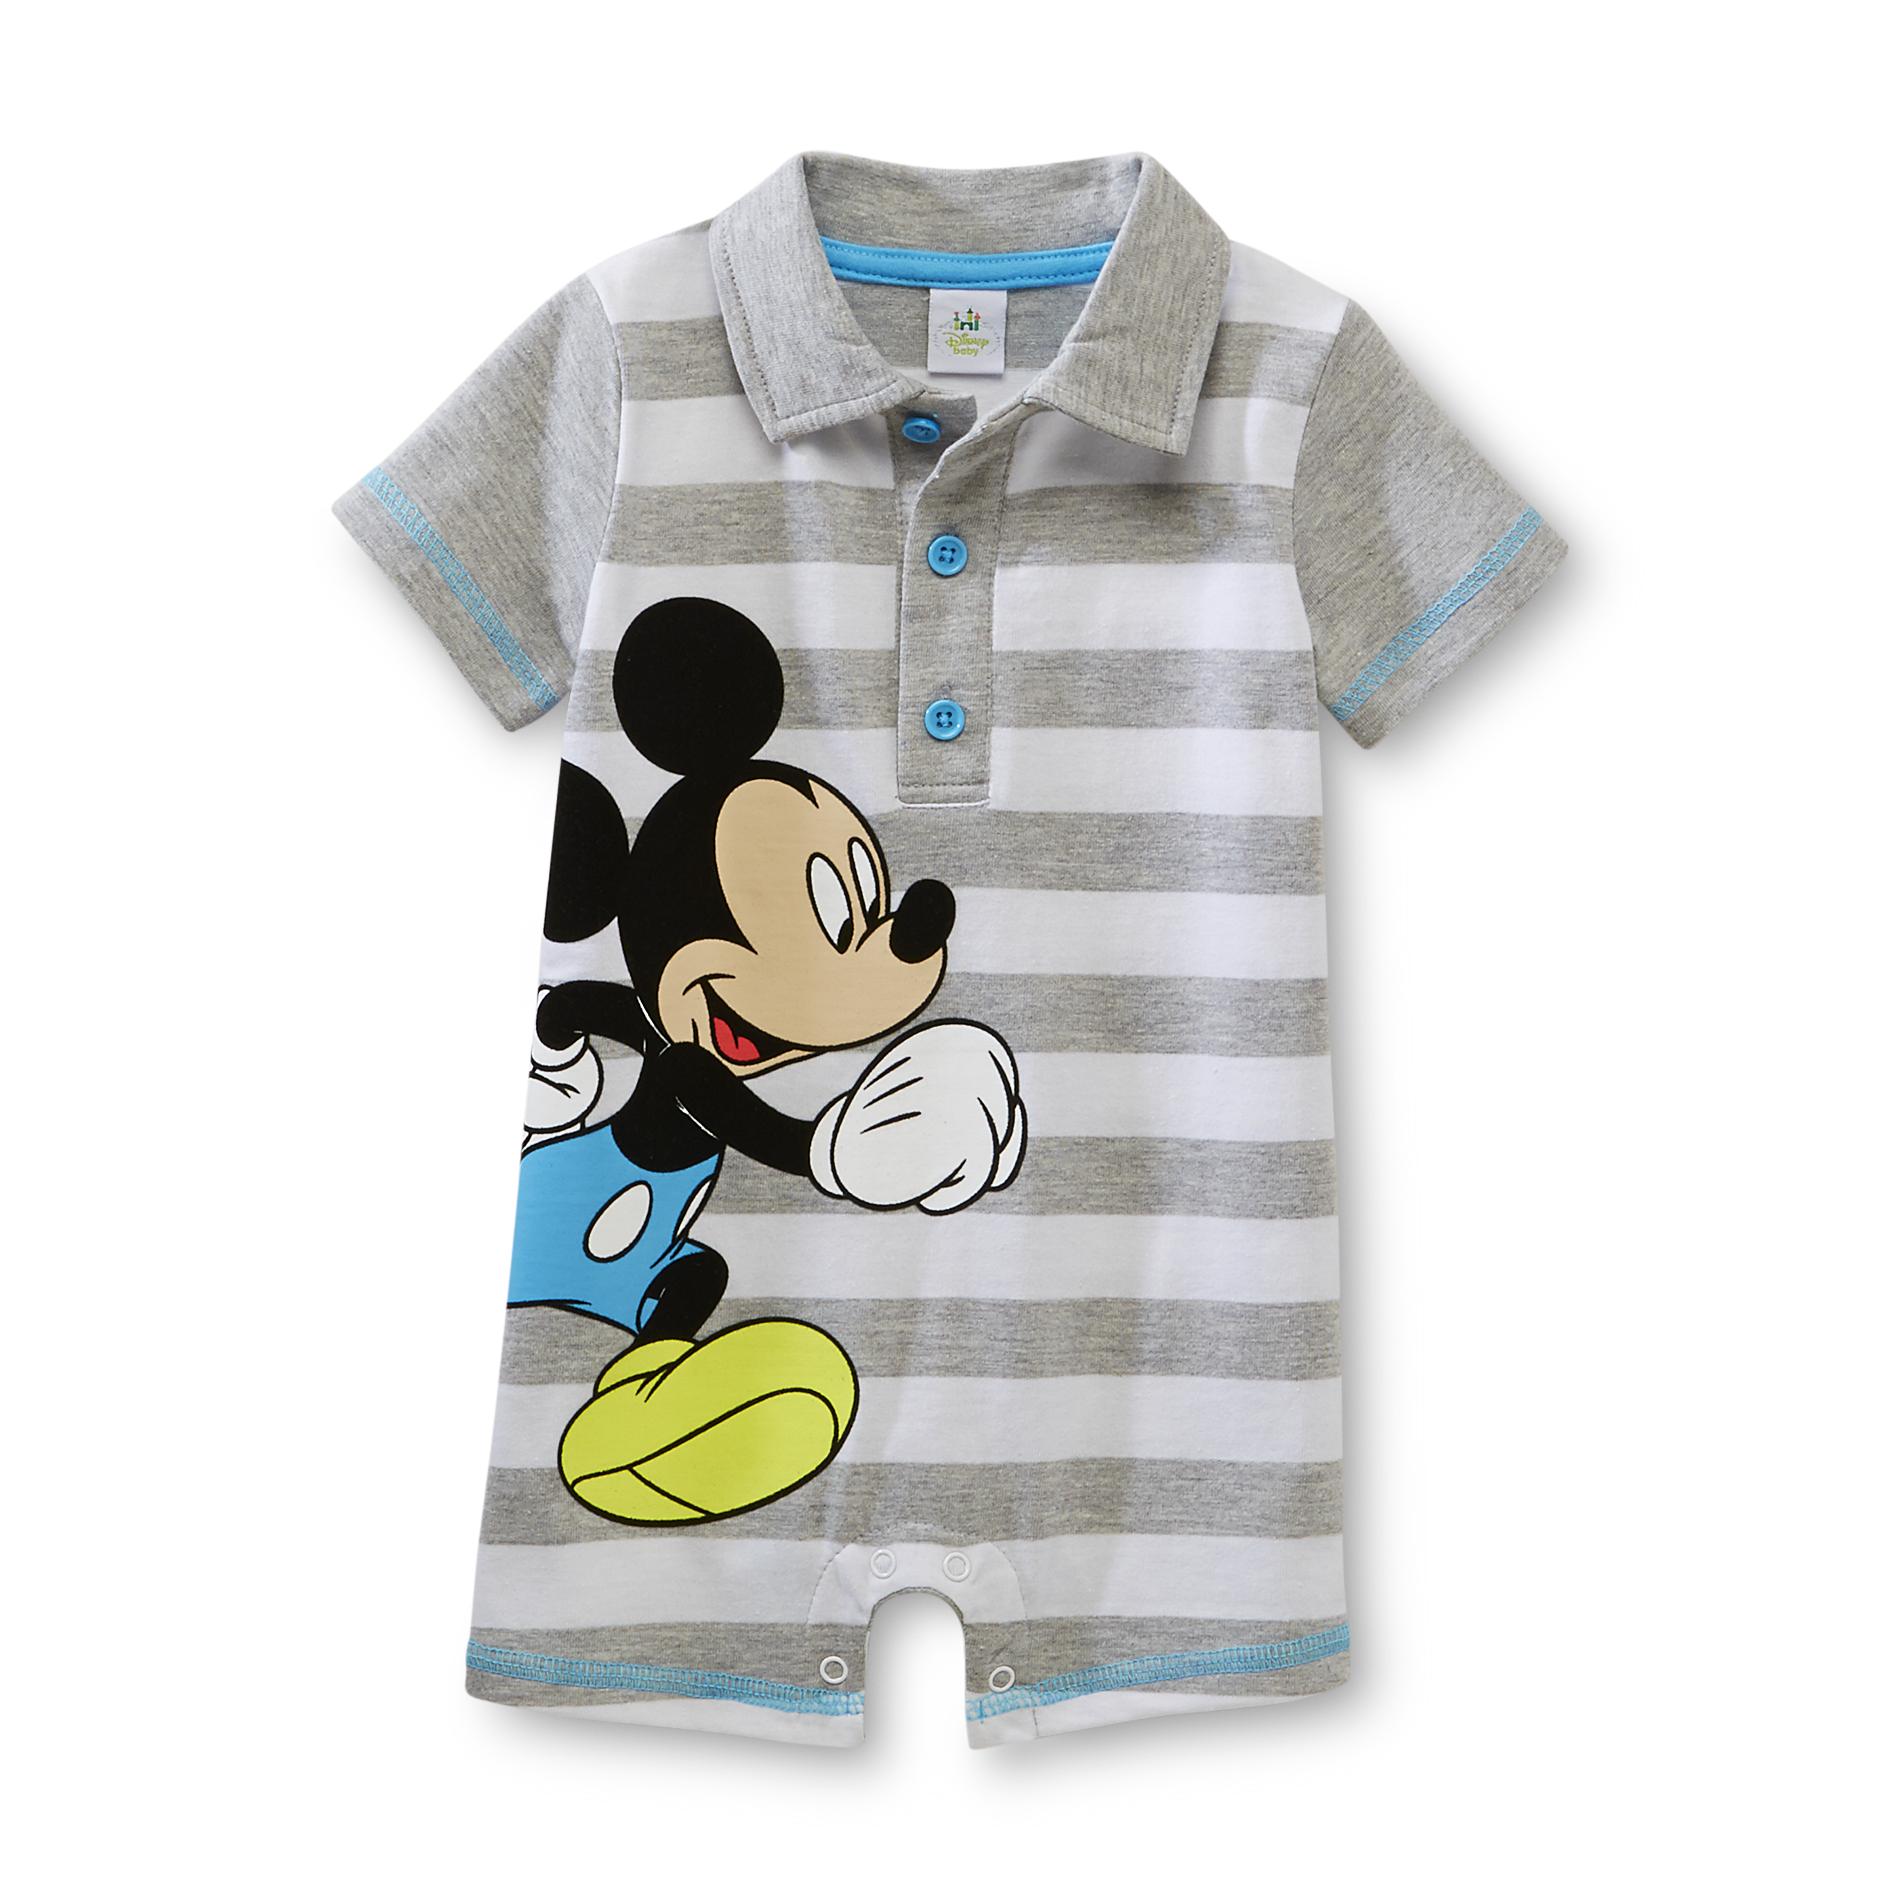 Disney Newborn & Infant Boy's Polo Romper - Striped & Mickey Mouse